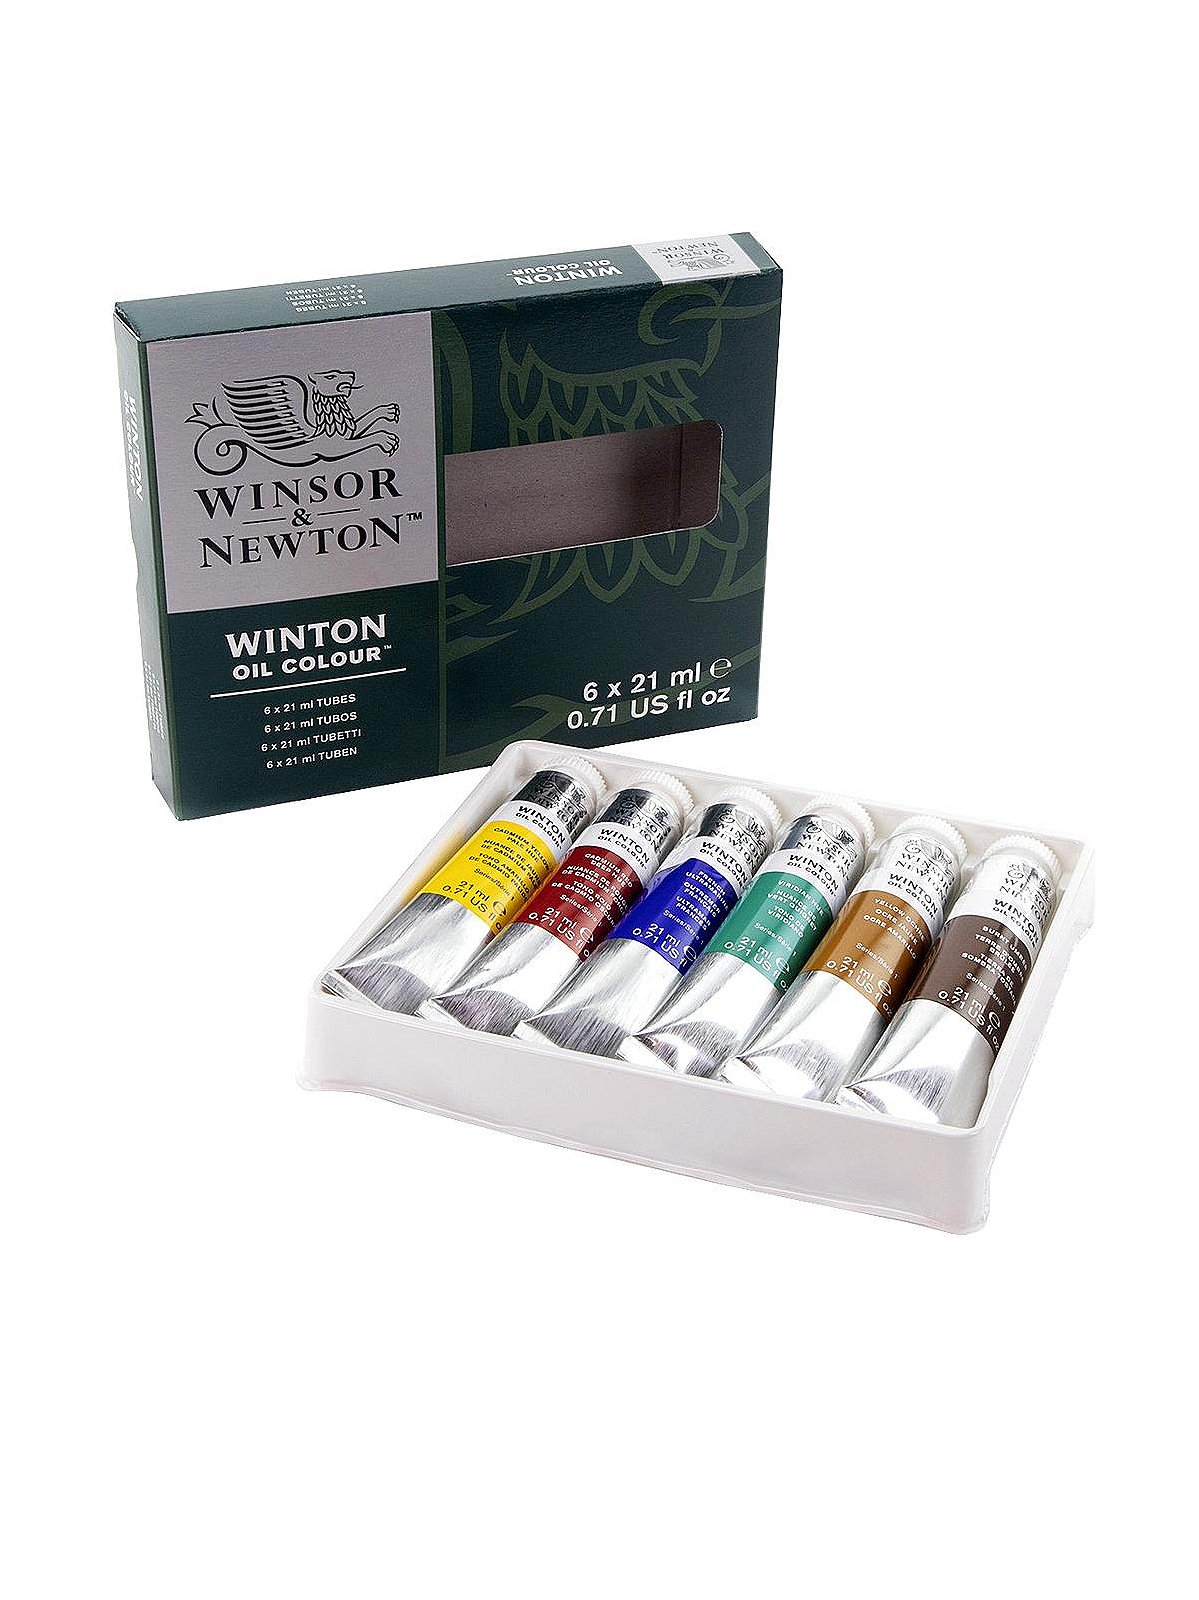 Winsor & Newton Oil Pastel sets